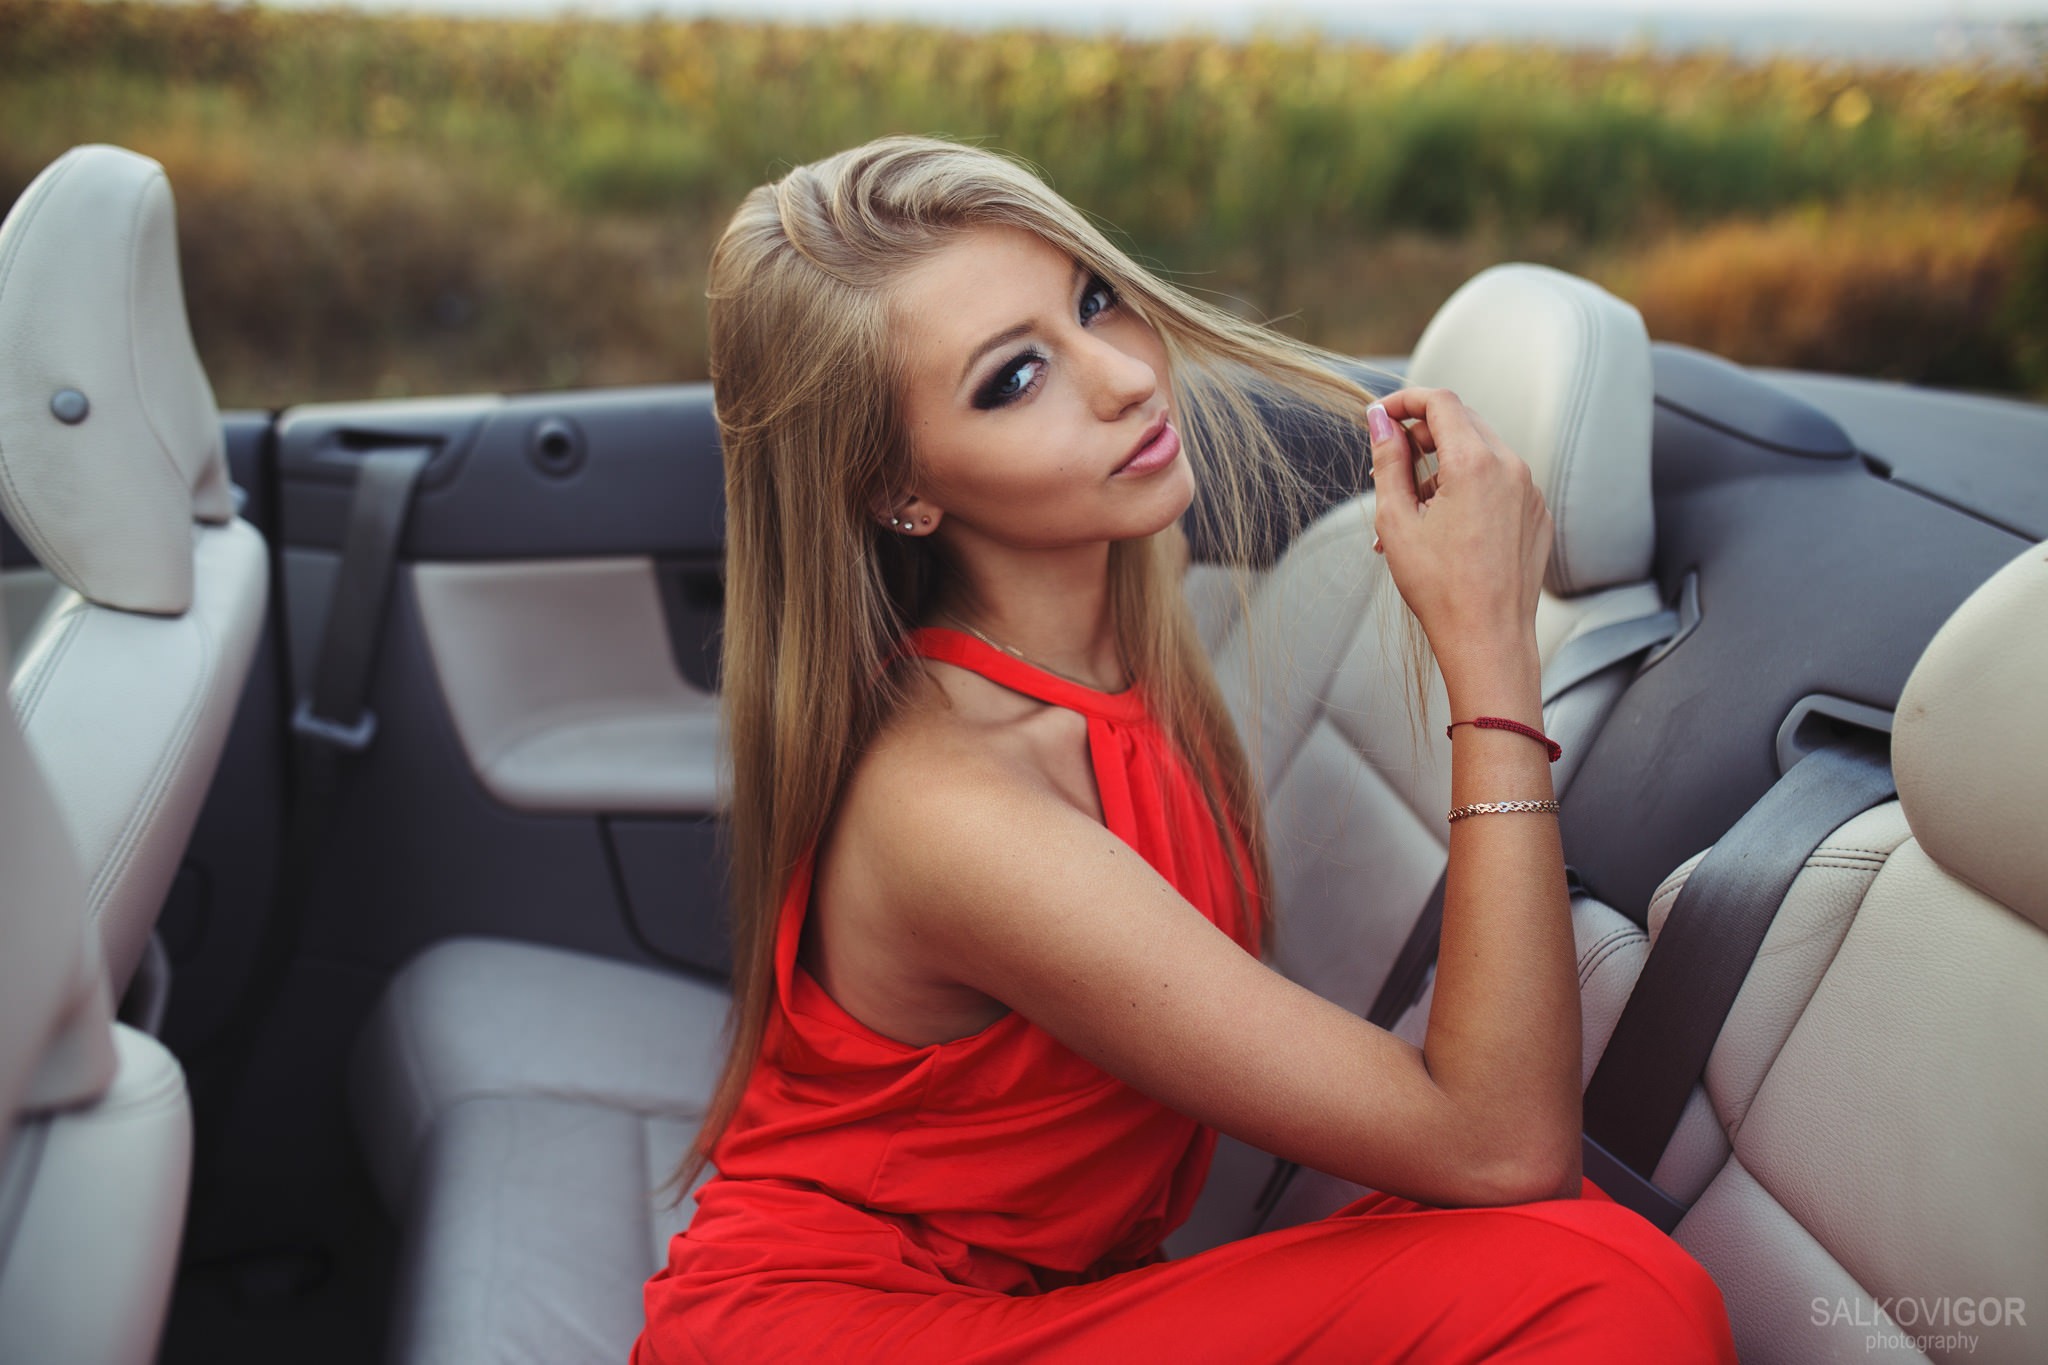 People 2048x1365 women blonde red dress sitting car car interior holding hair Igor Salkov long hair Anastasia Ivashchenko women with cars vehicle pink lipstick model red clothing Salkovigor Photography